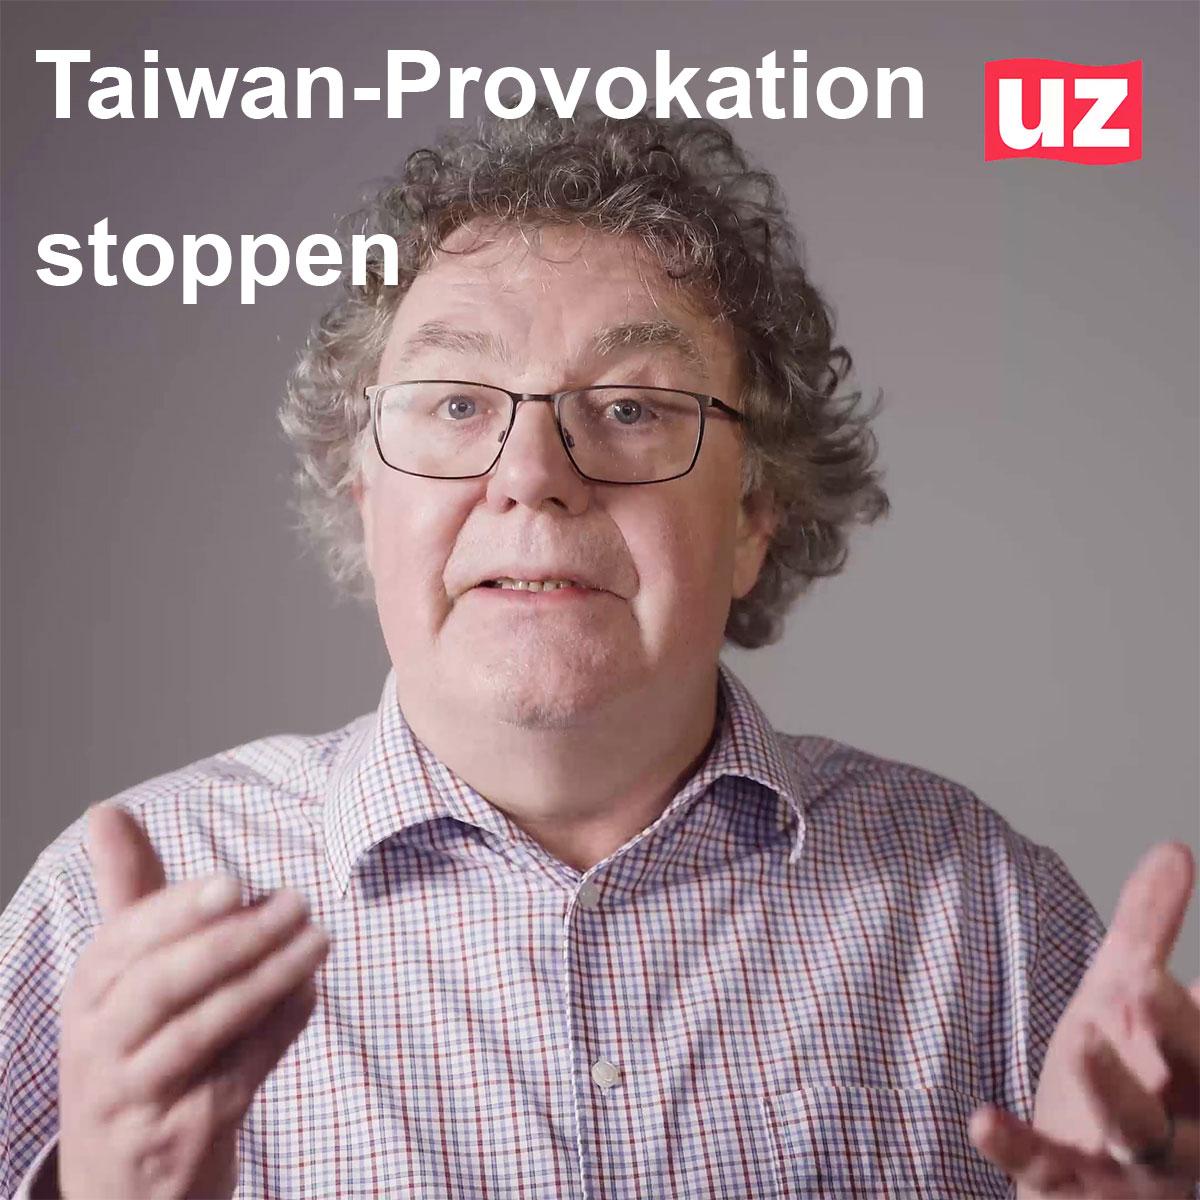 230412 taiwan - Taiwan-Provokation stoppen! - DKP, Patrik Köbele, Taiwan, VR China - Blog, DKP in Aktion